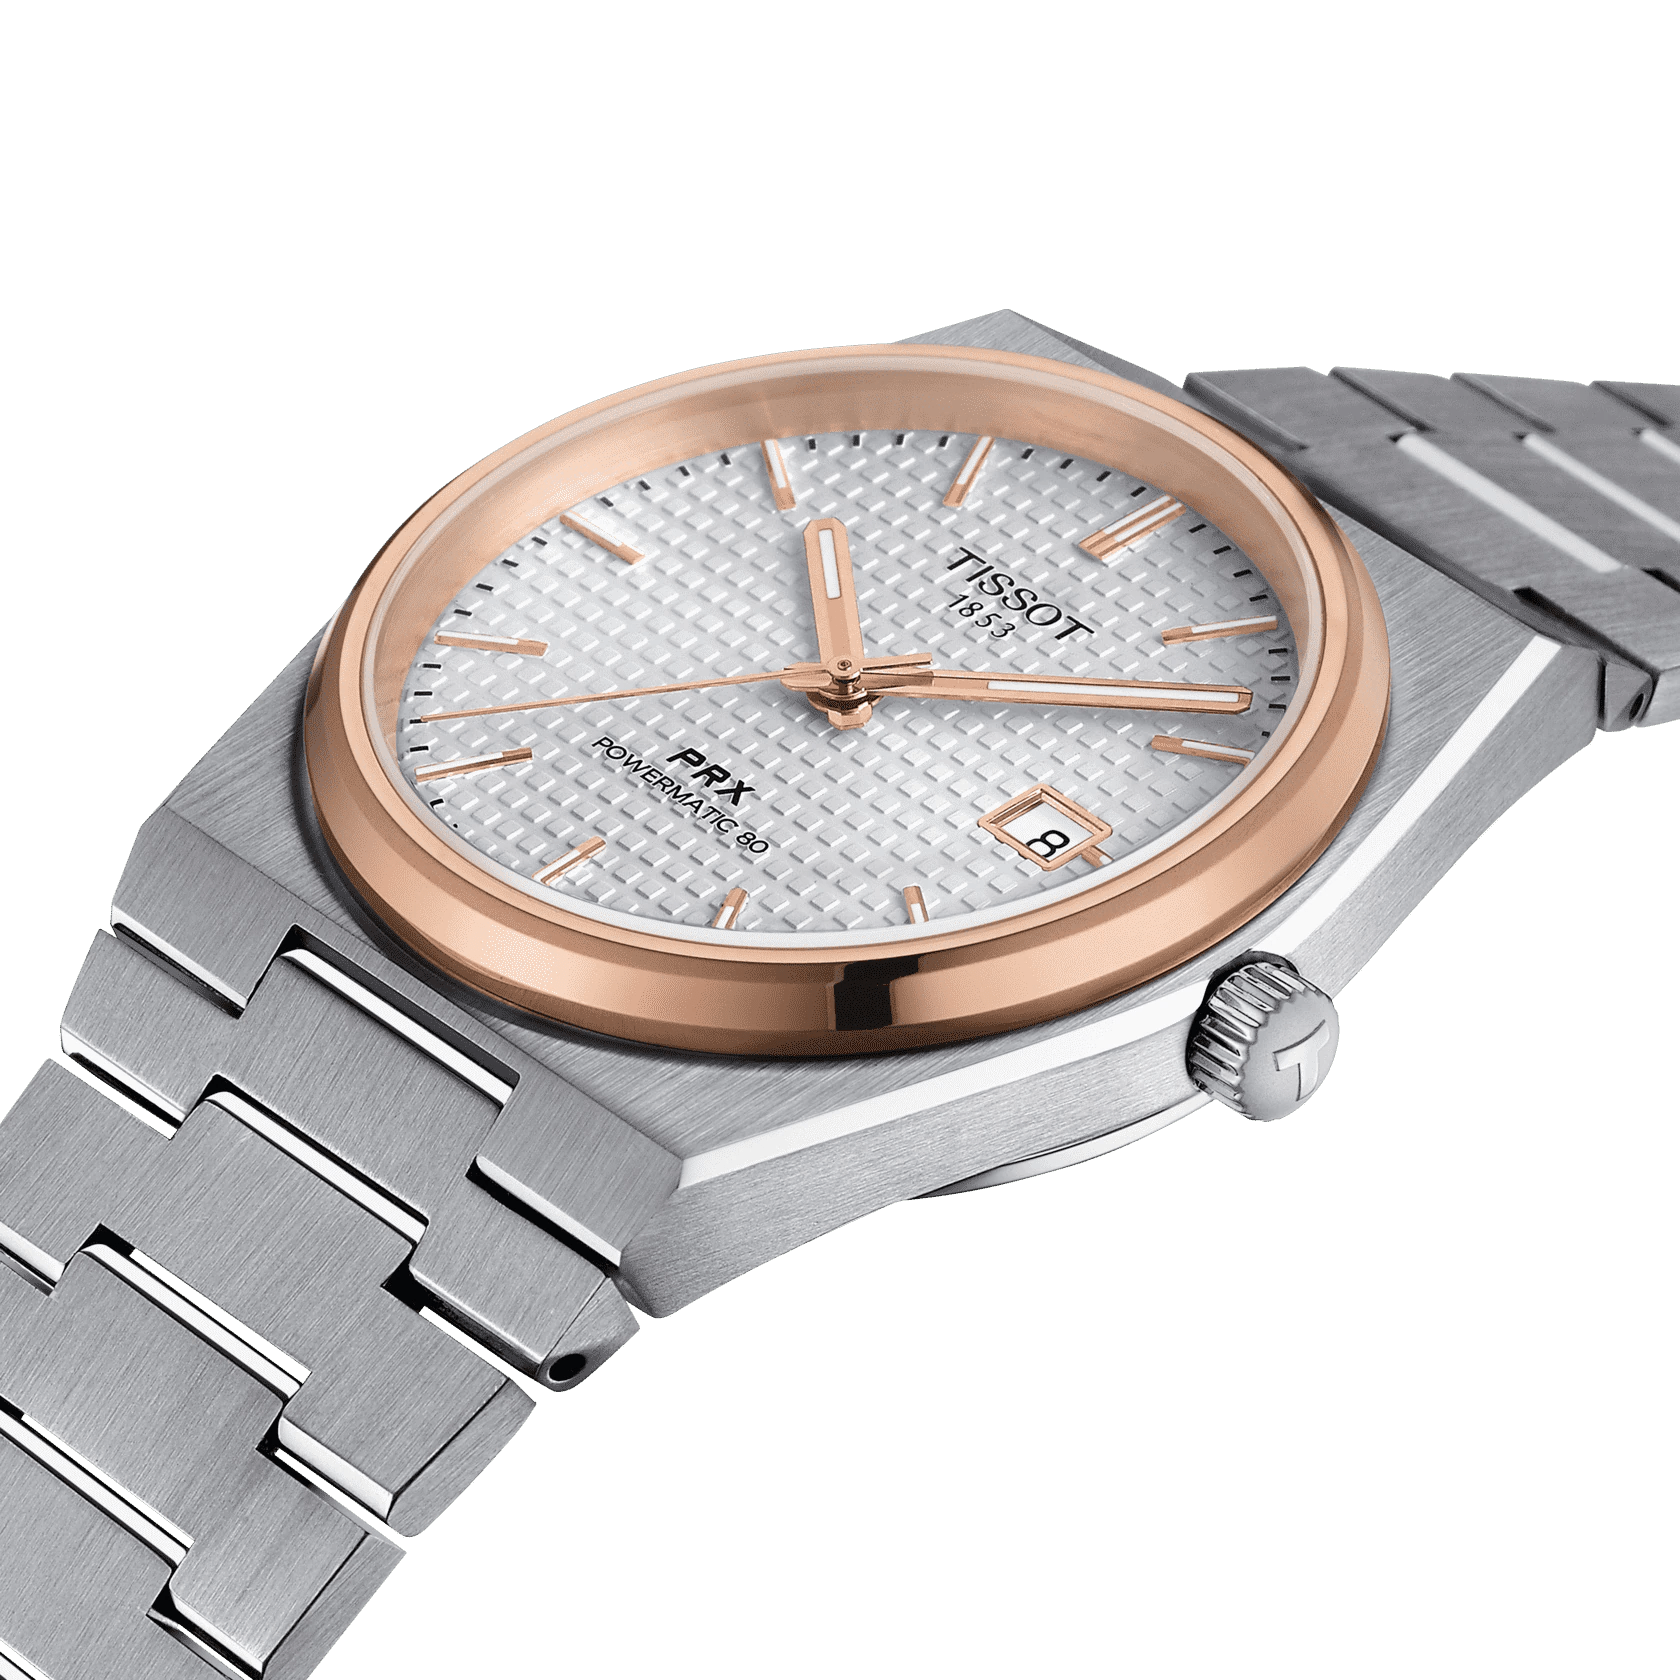 Tissot PRX Powermatic 80 Rose Gold-Silver Automatic Men's Watch T1374072103100